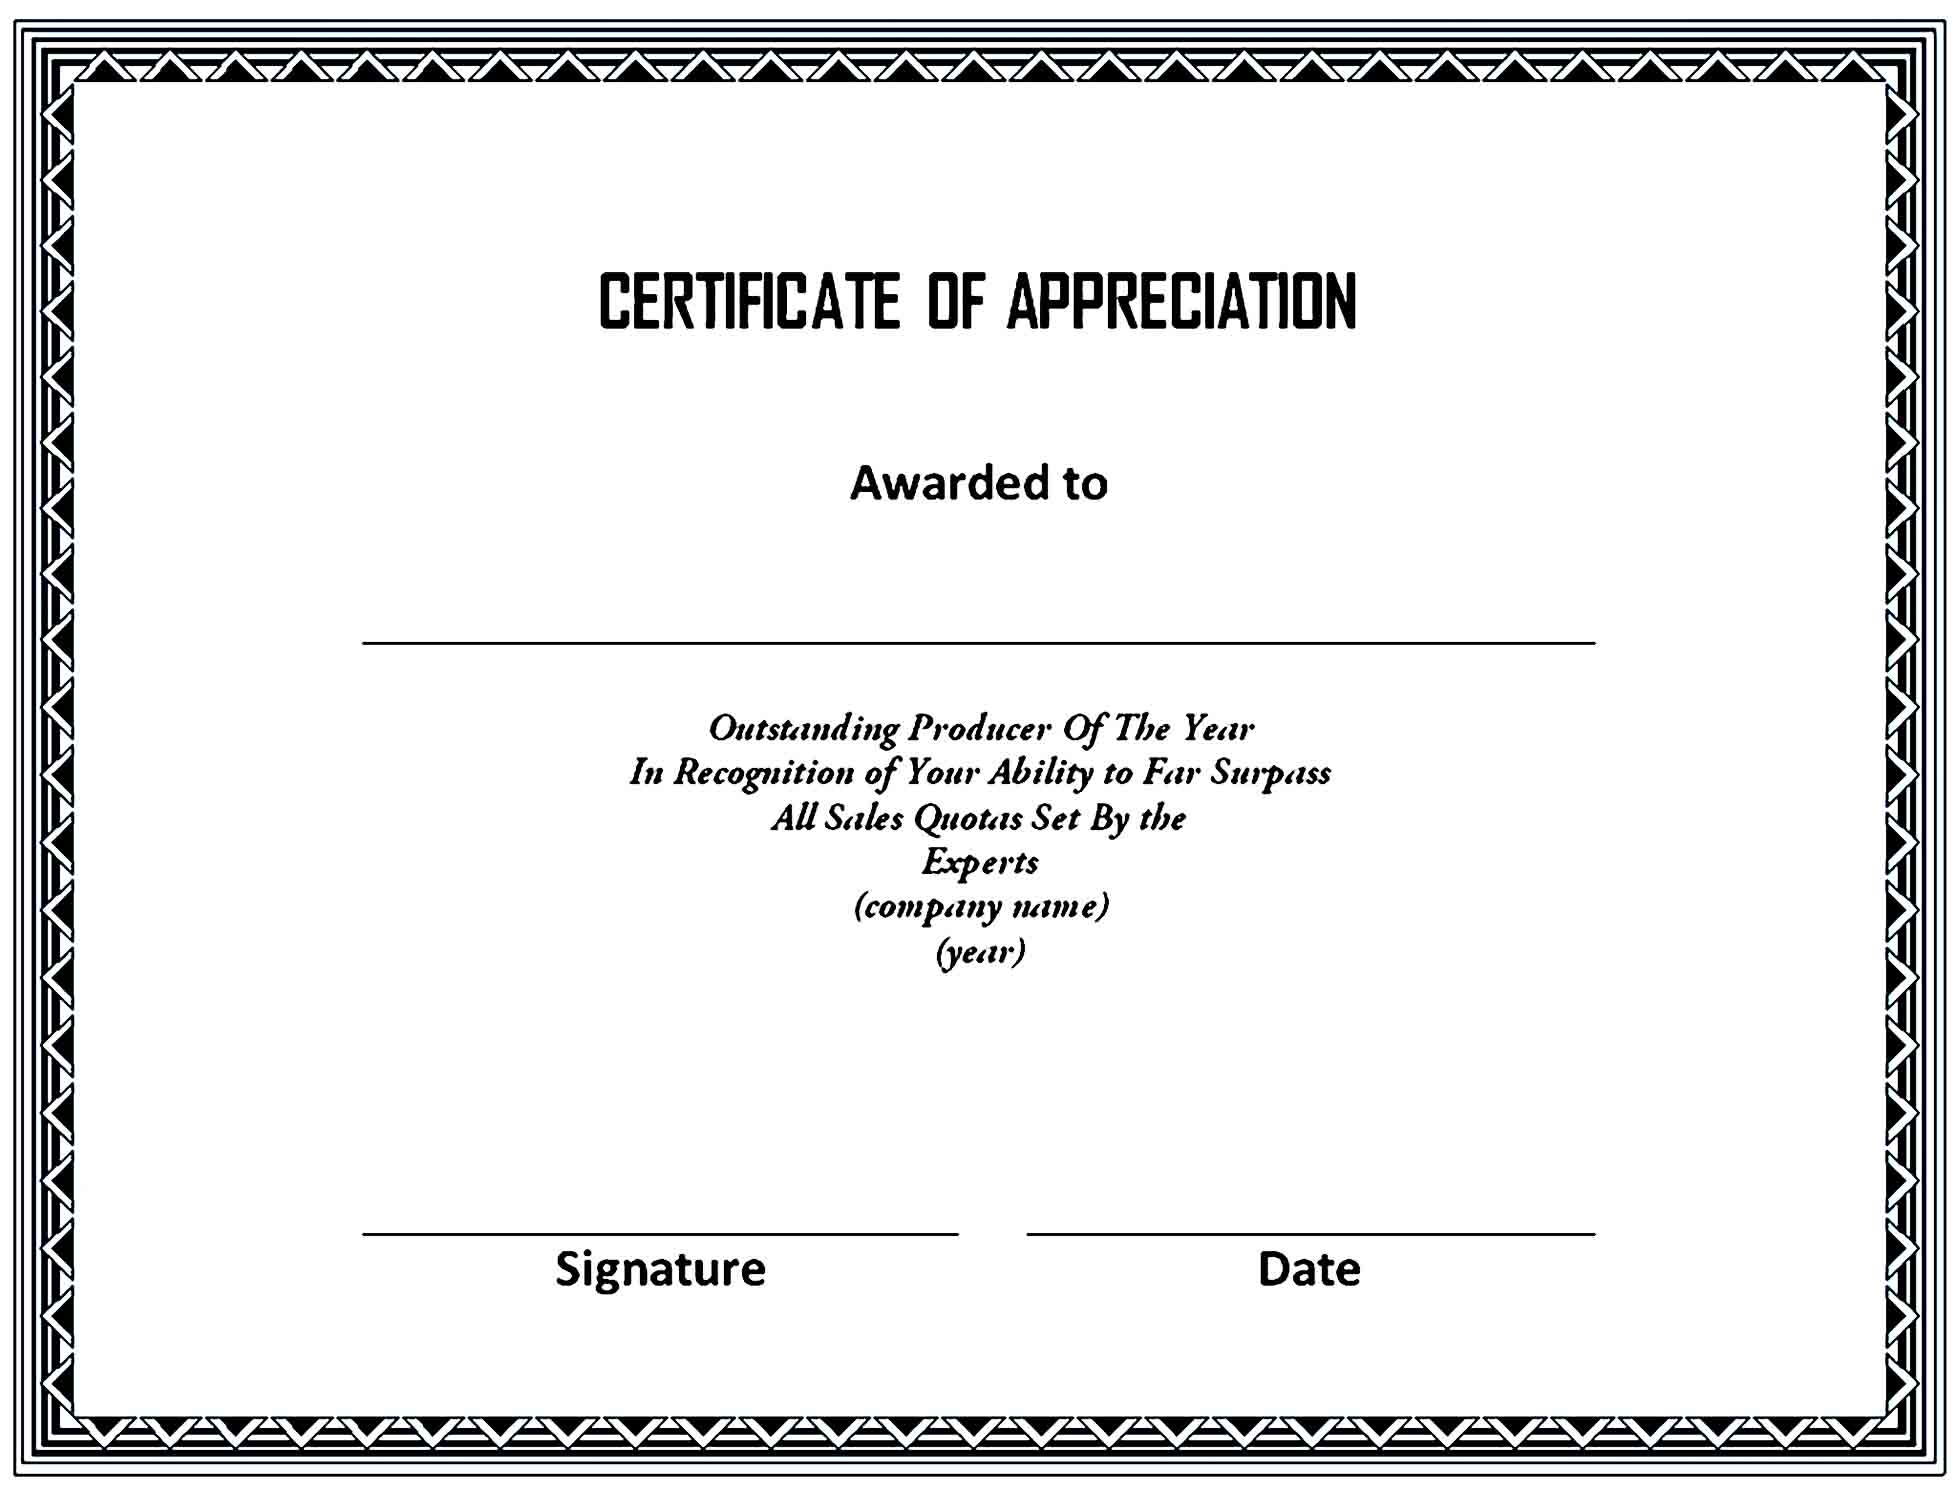 Certificate of Appreciation 06